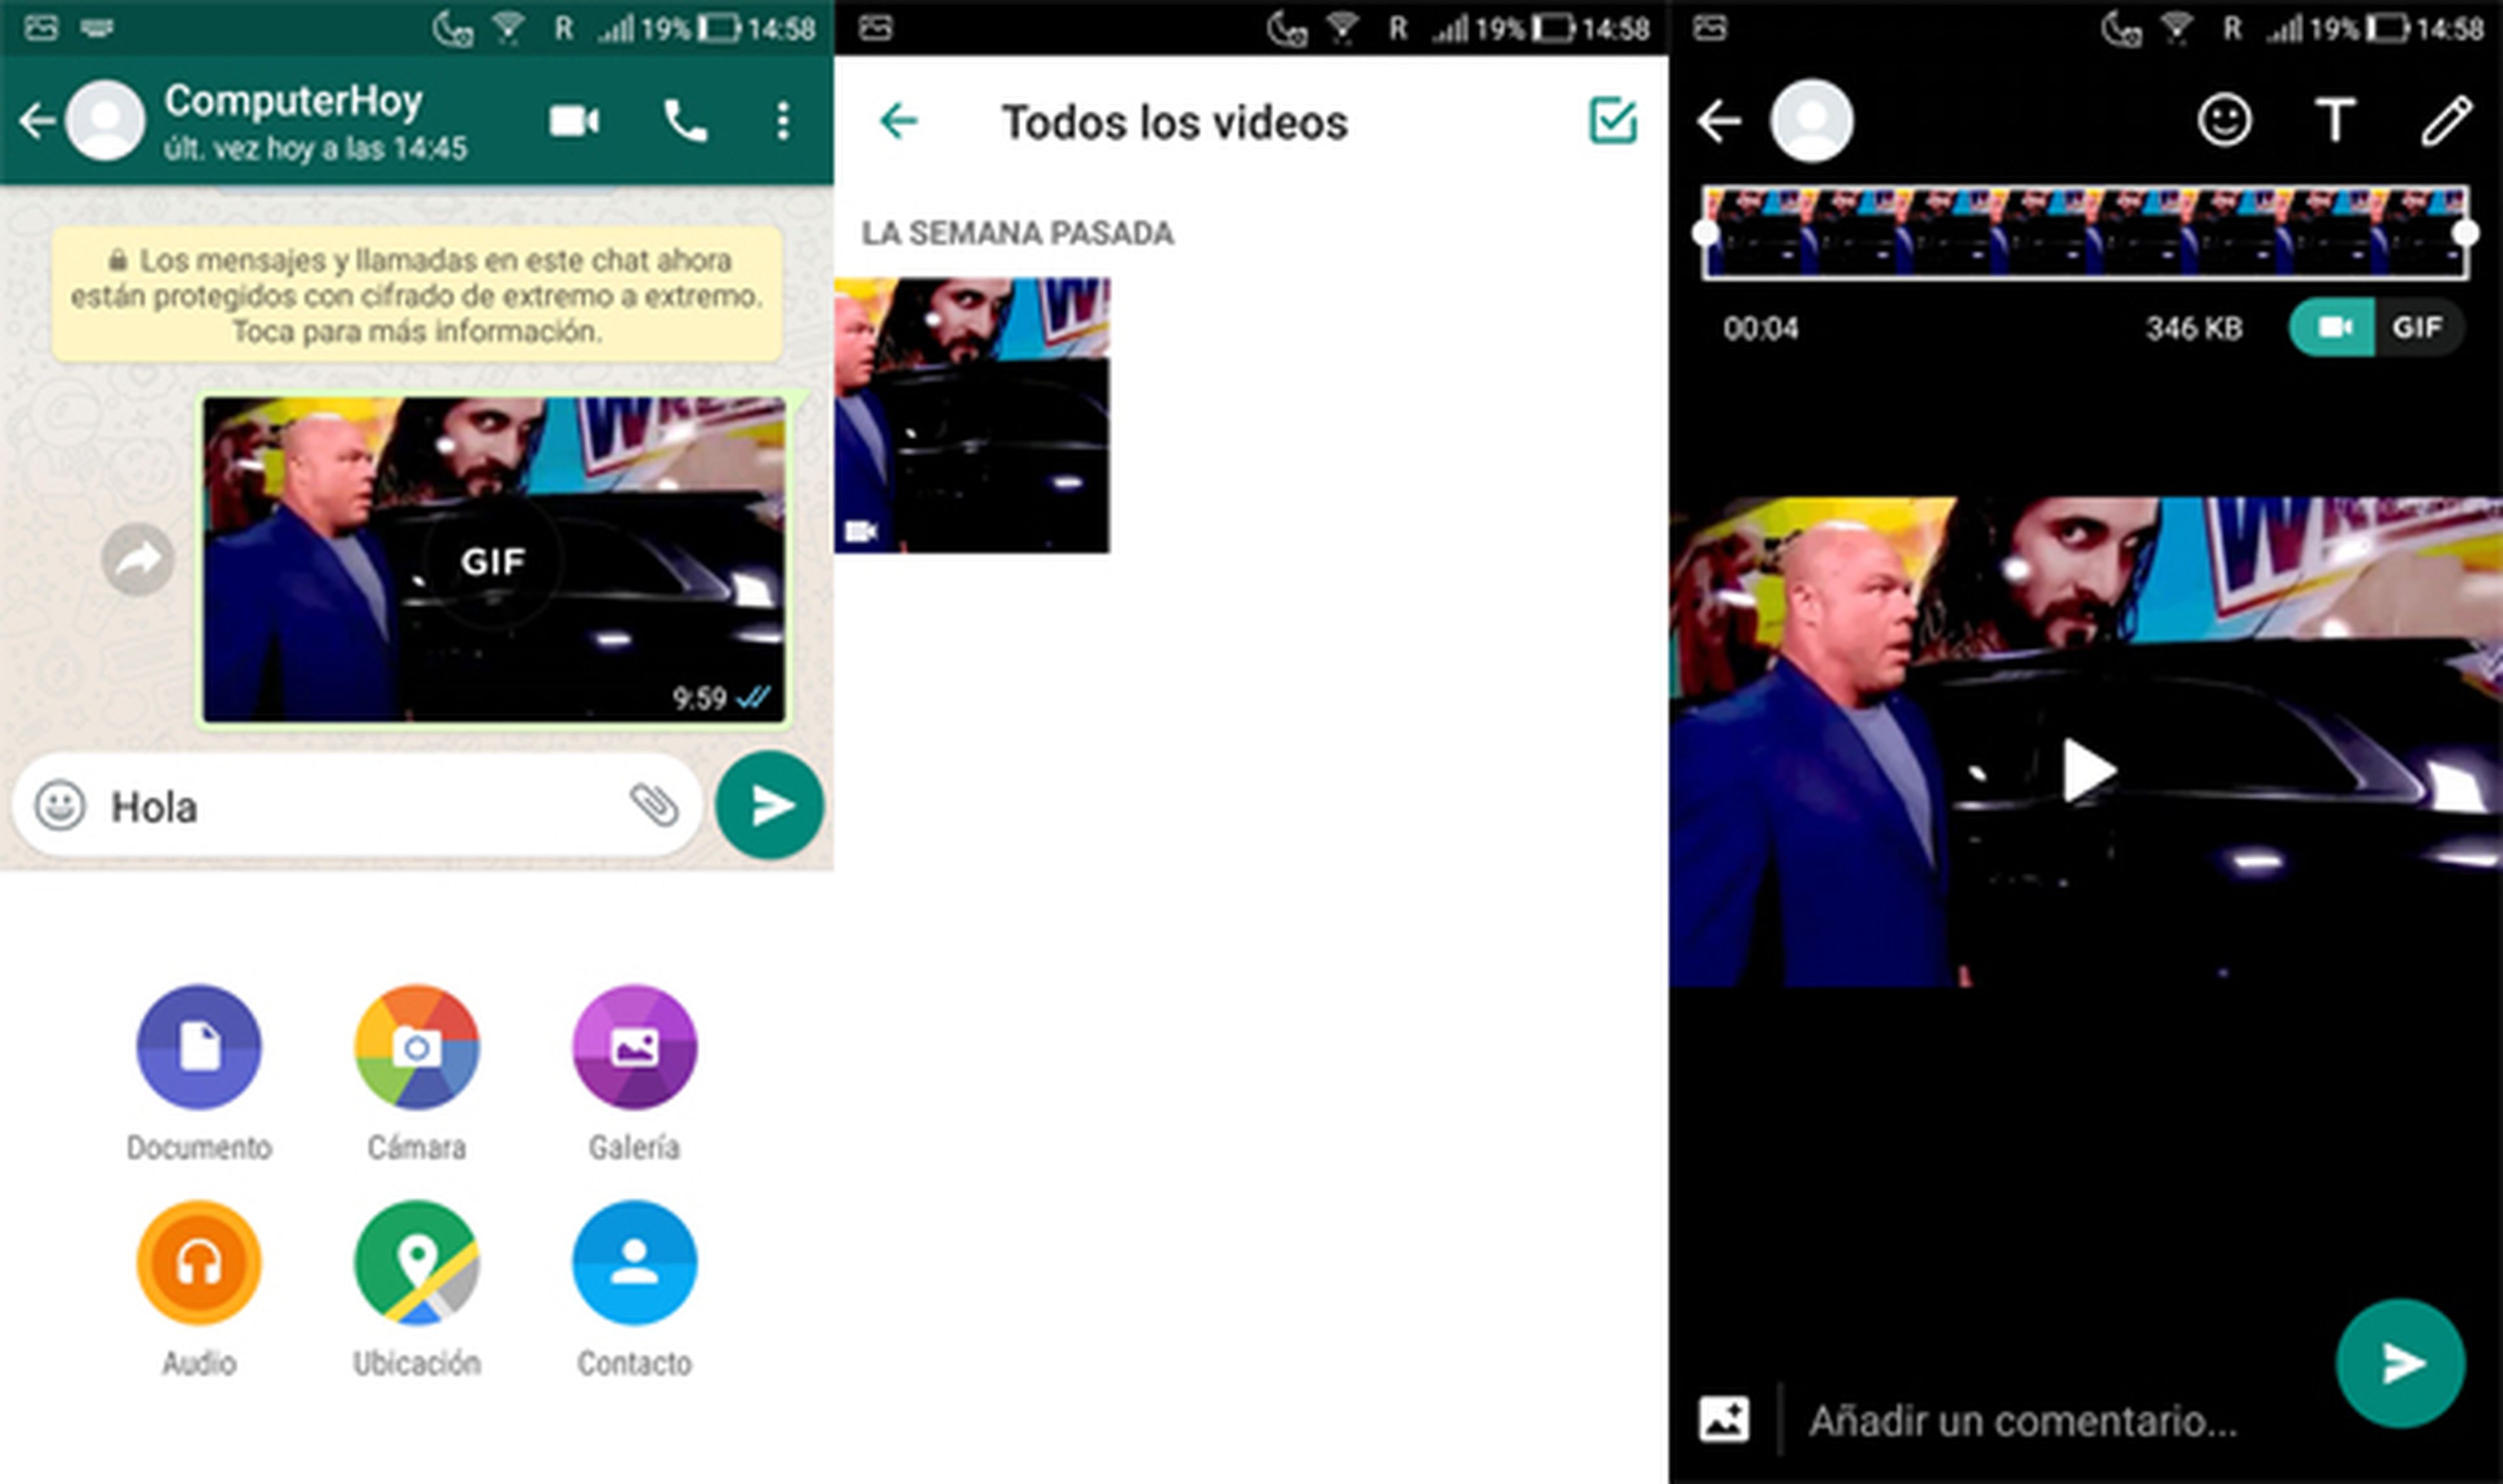 Convertir un vídeo en un GIF en WhatsApp